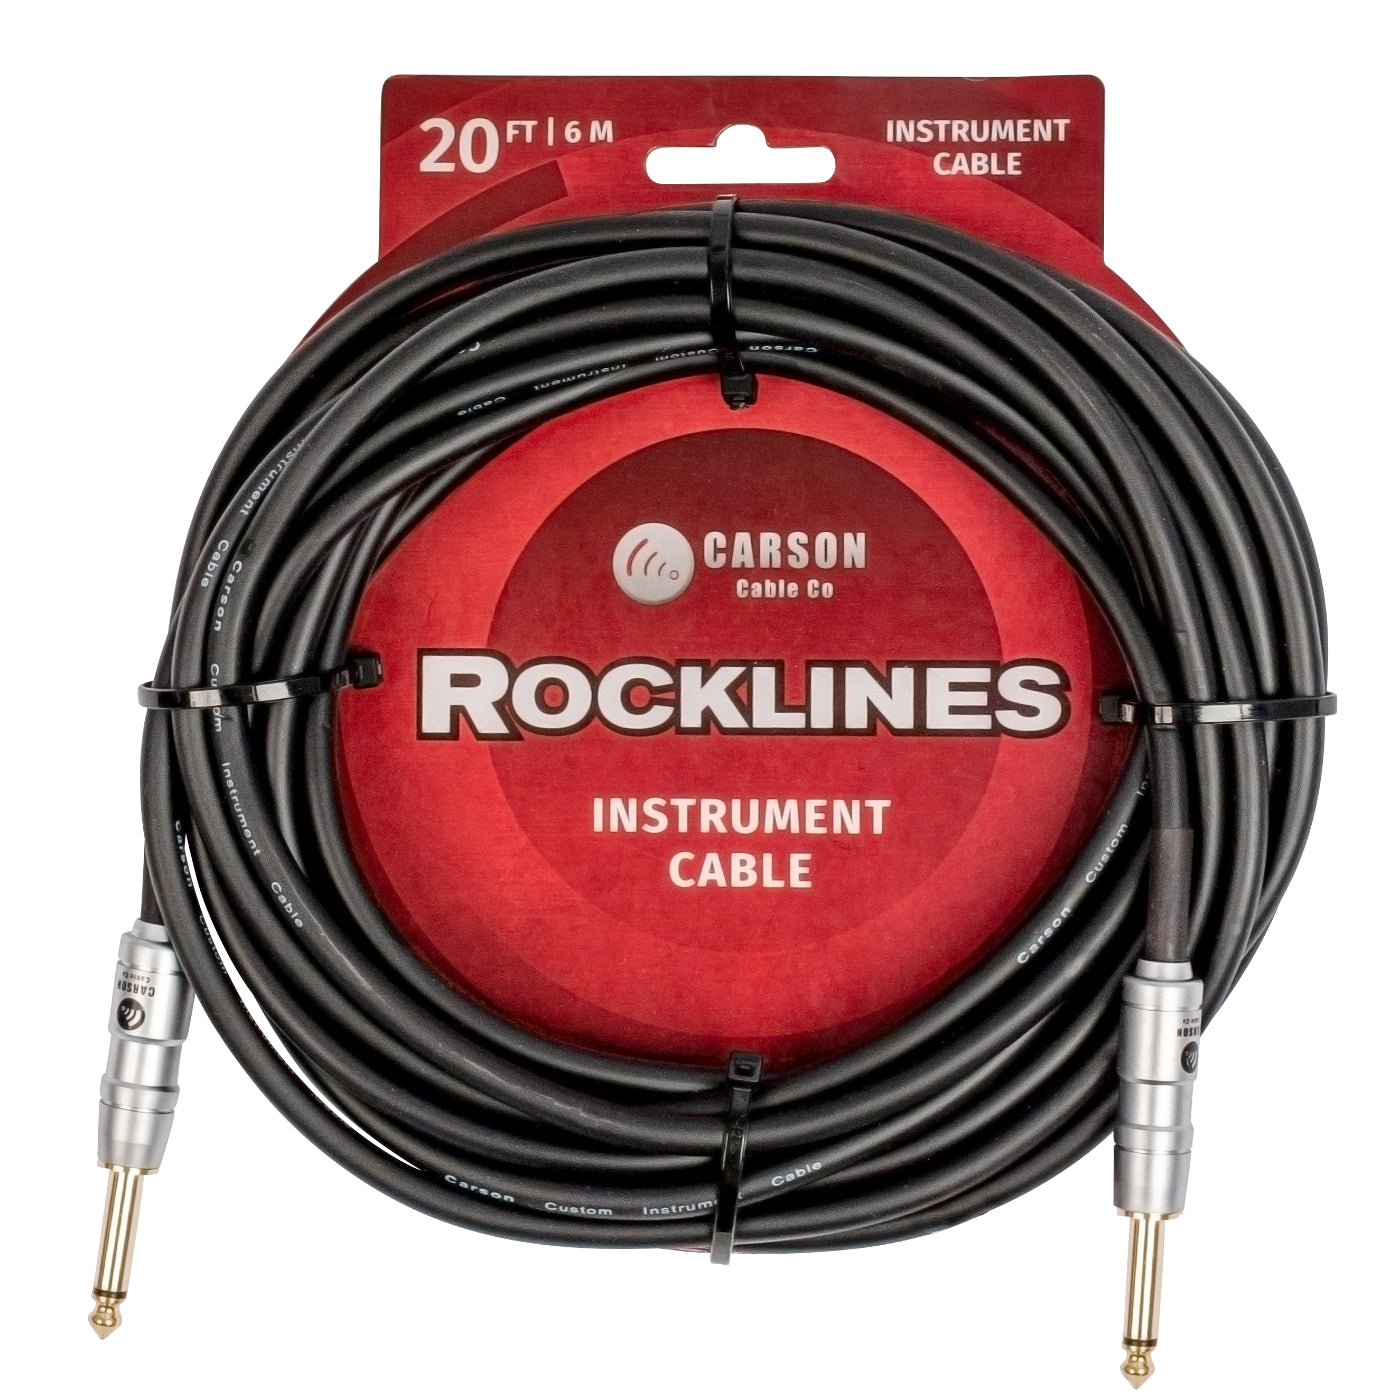 Carson Rocklines Noiseless Guitar Cable, Black